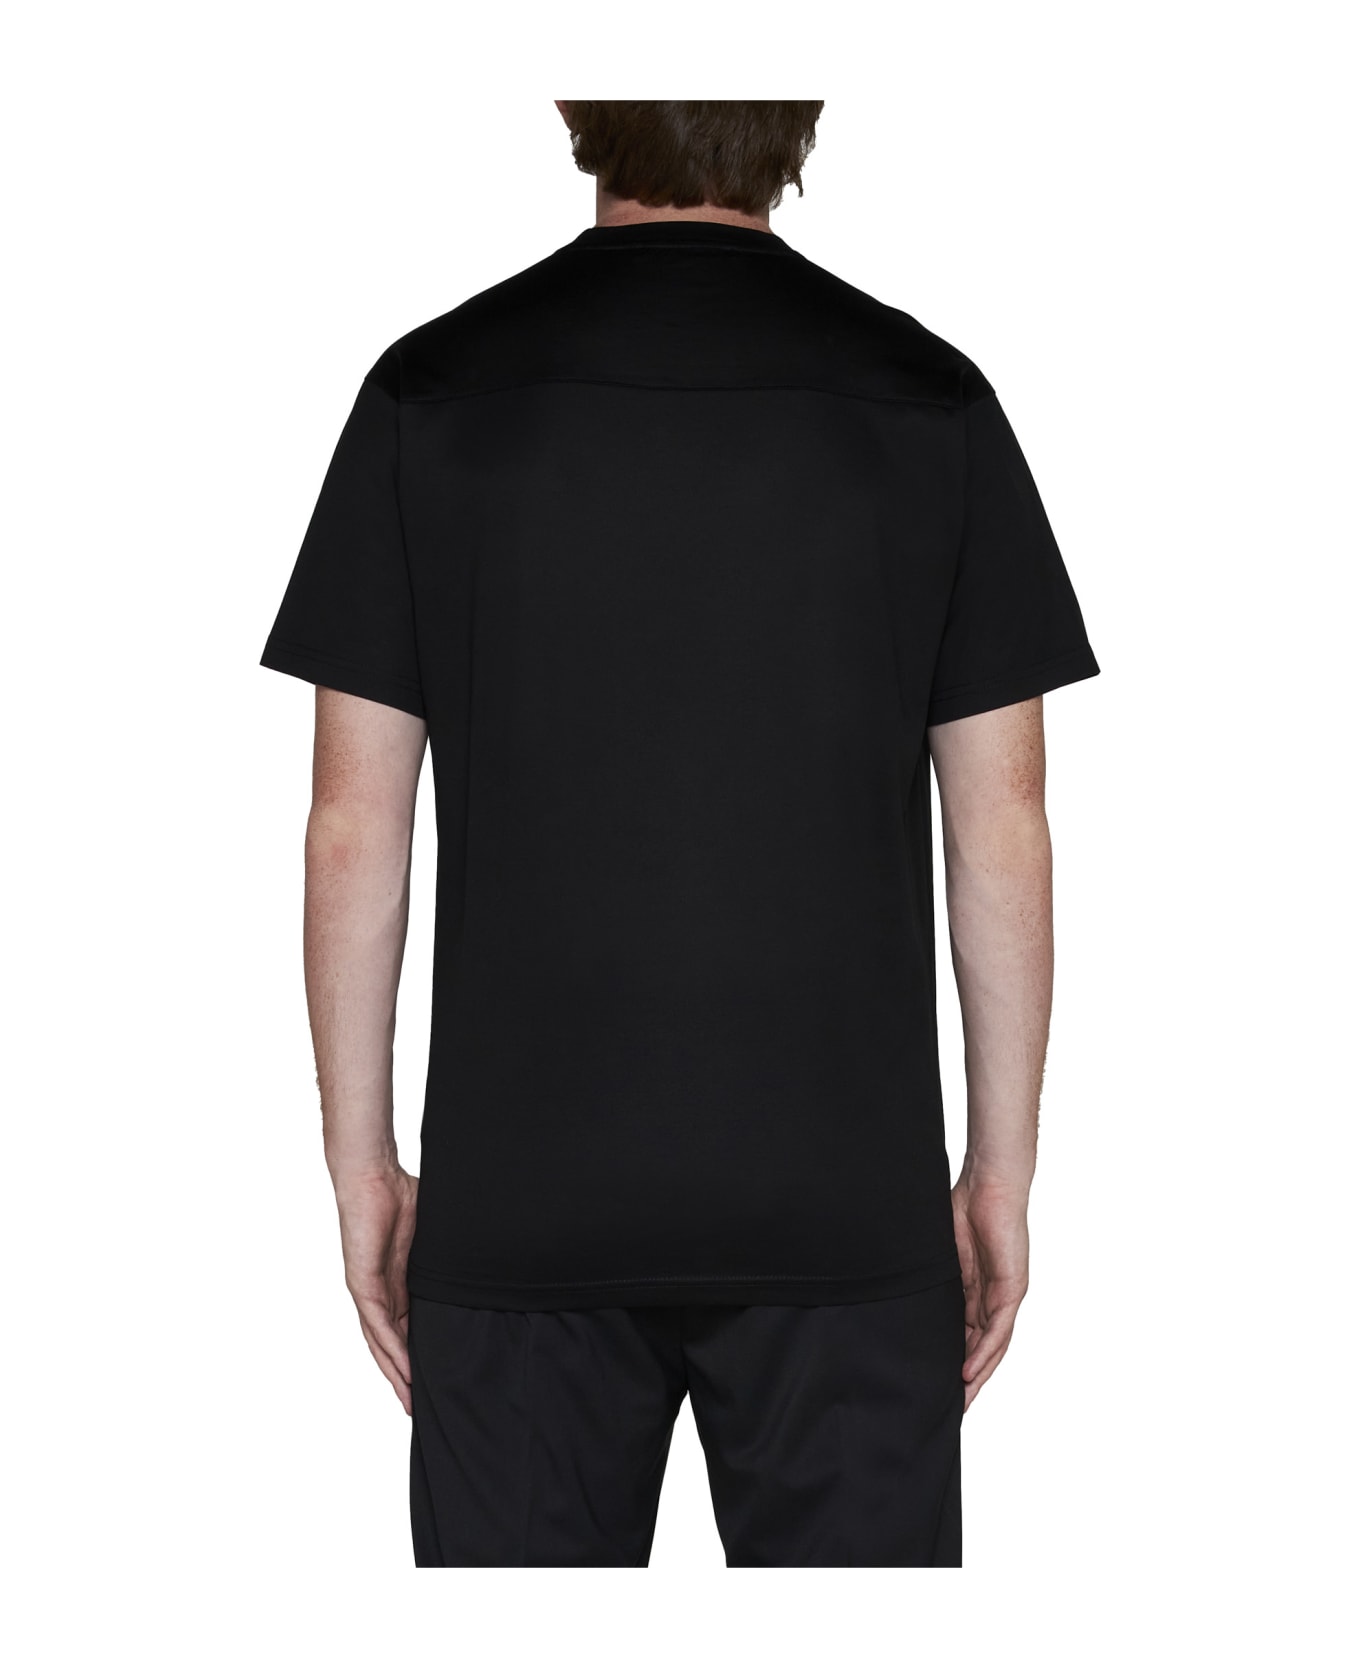 Low Brand T-Shirt - Jet black シャツ